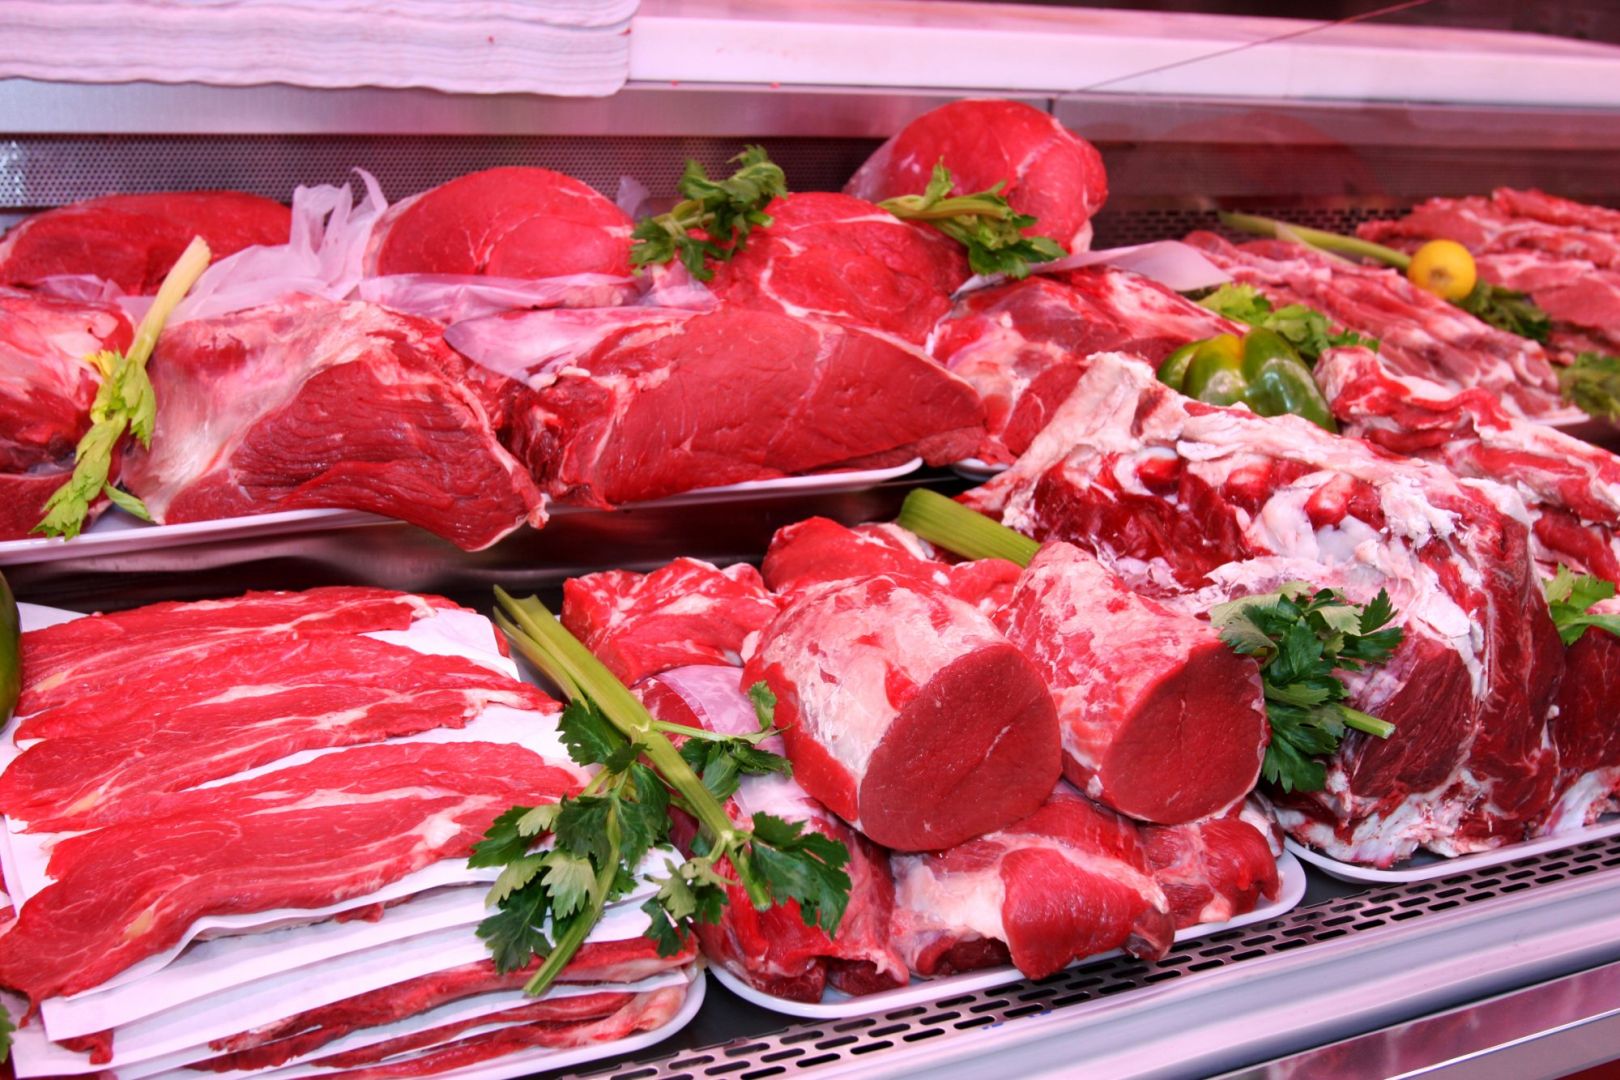 Azerbaijan's meat imports increase